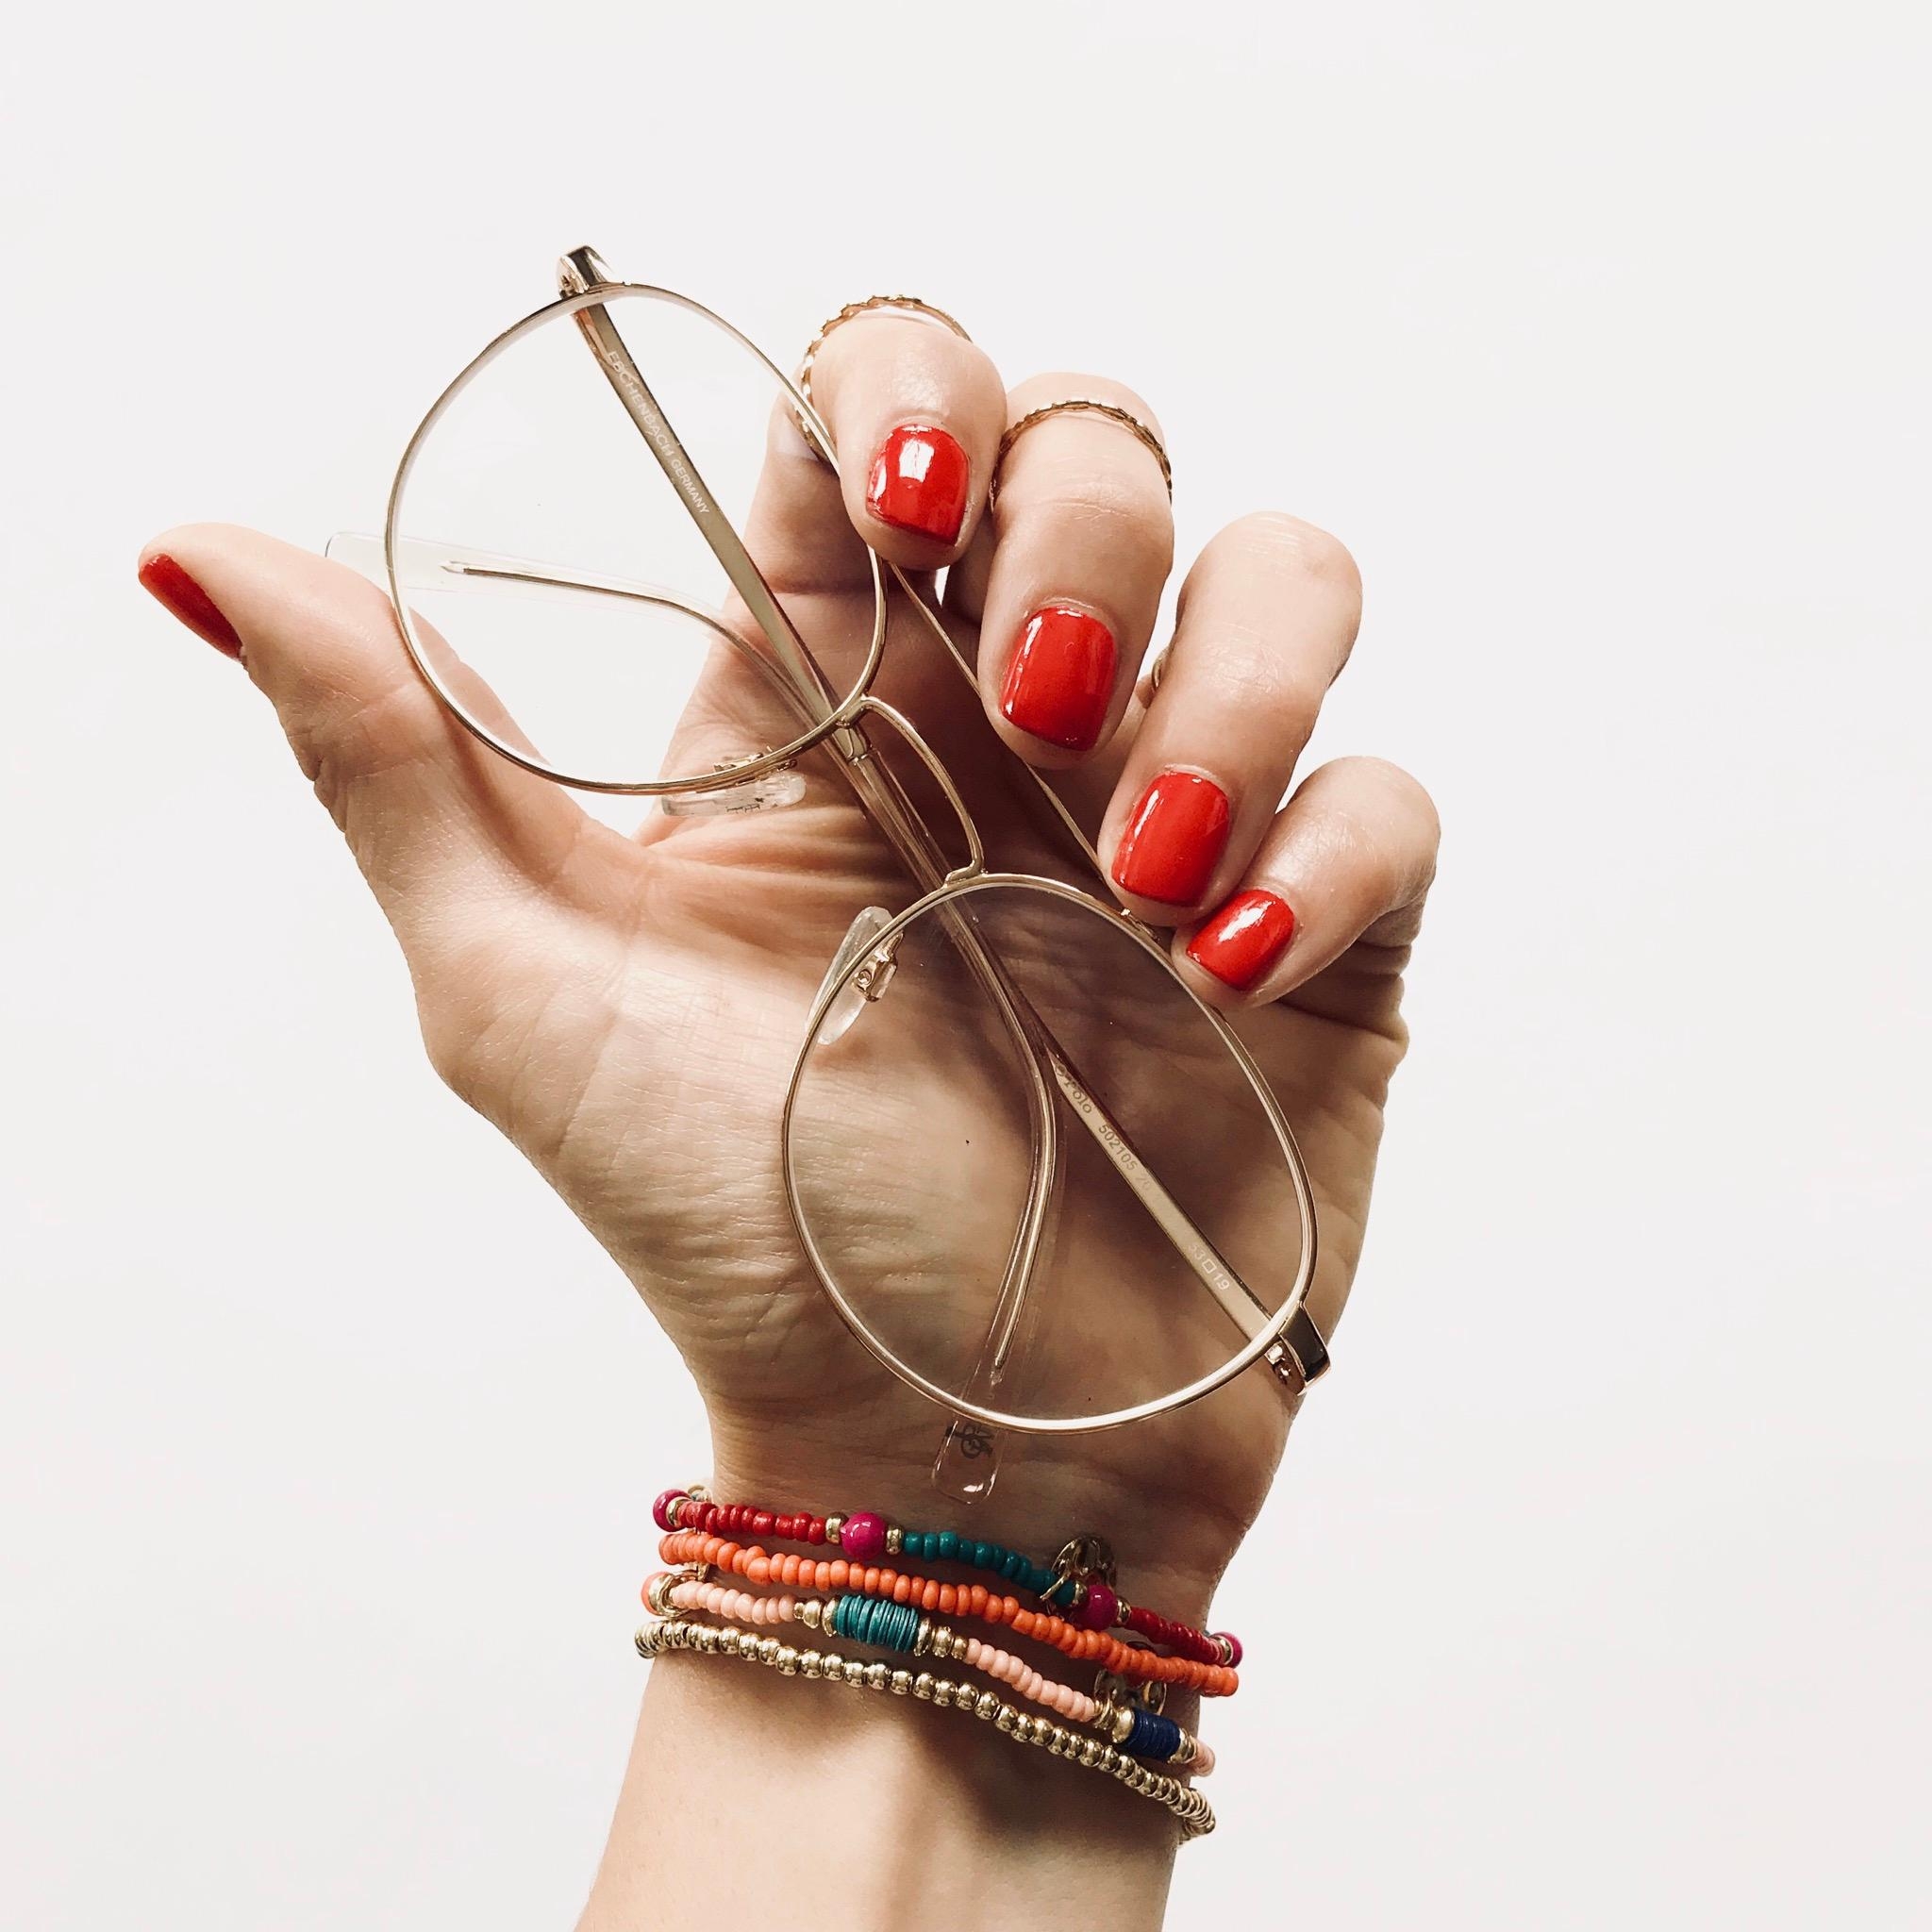 Große Brillenliebe.
#brille #accessoires #nagellack #sommer #fashion #gold